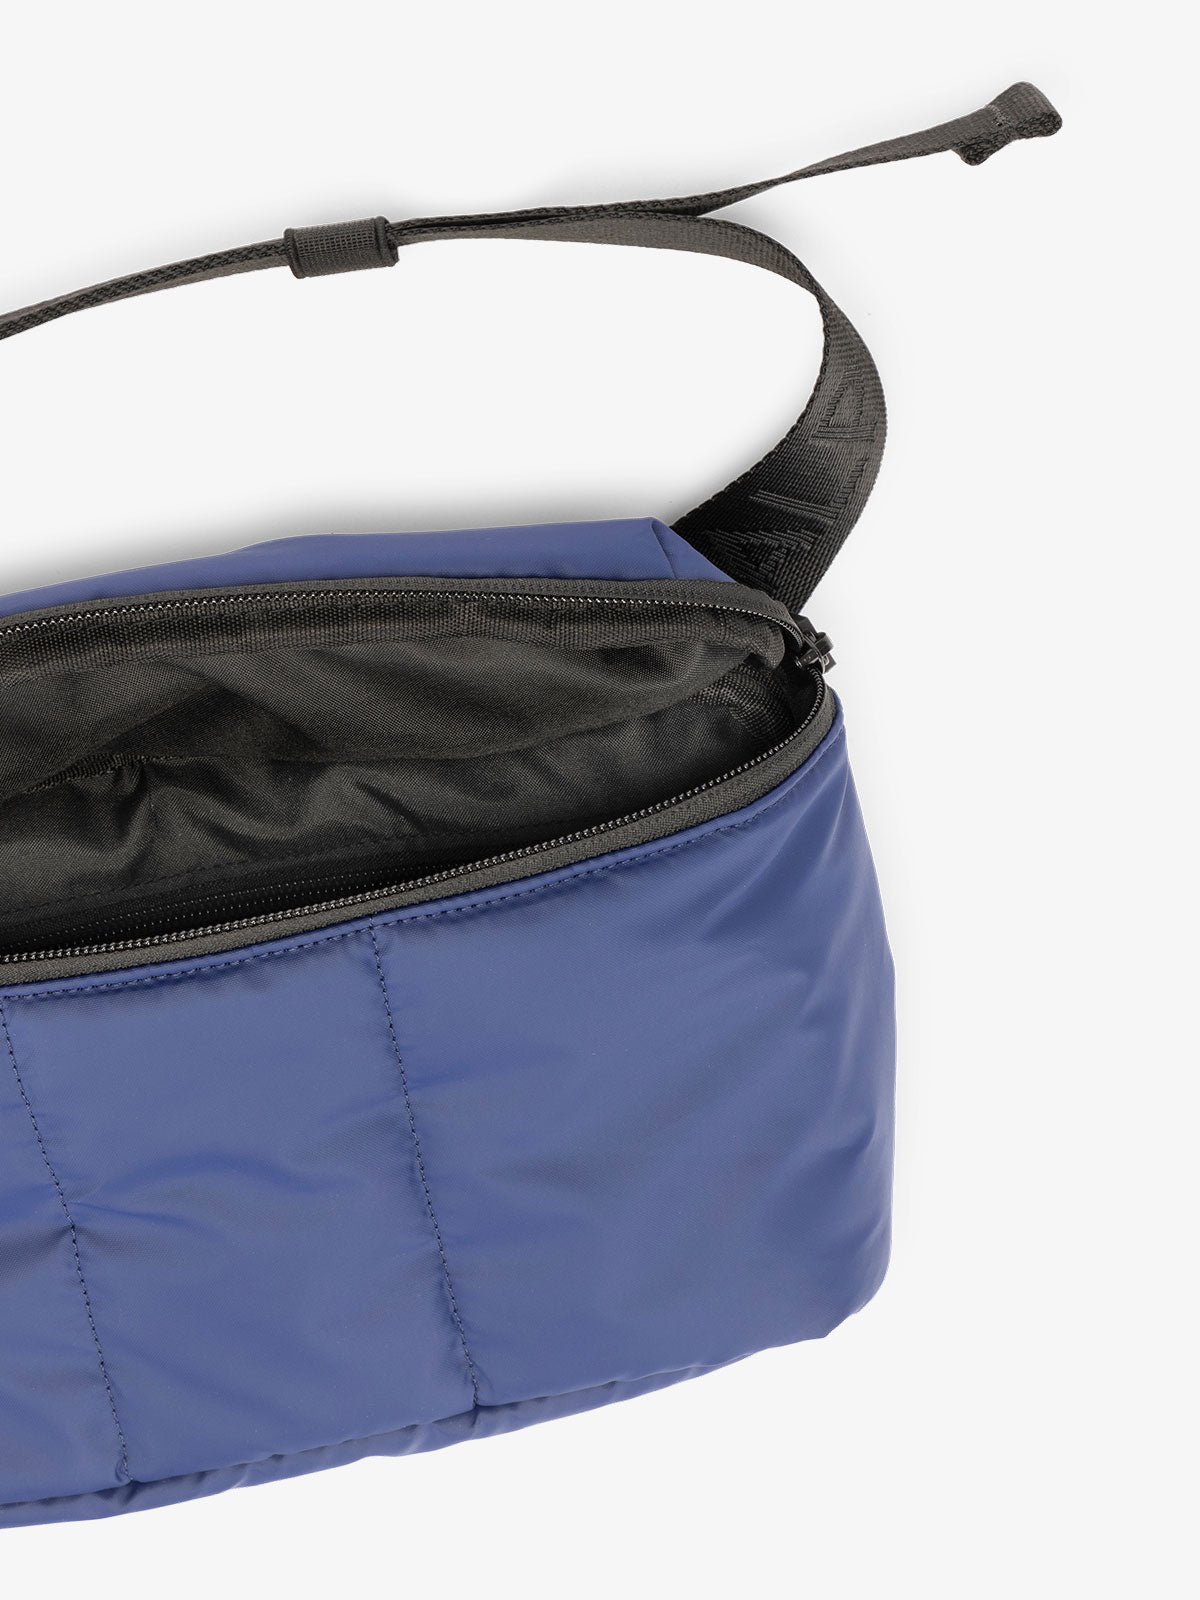 CALPAK Luka Belt Bag close up interior and strap in dark blue navy